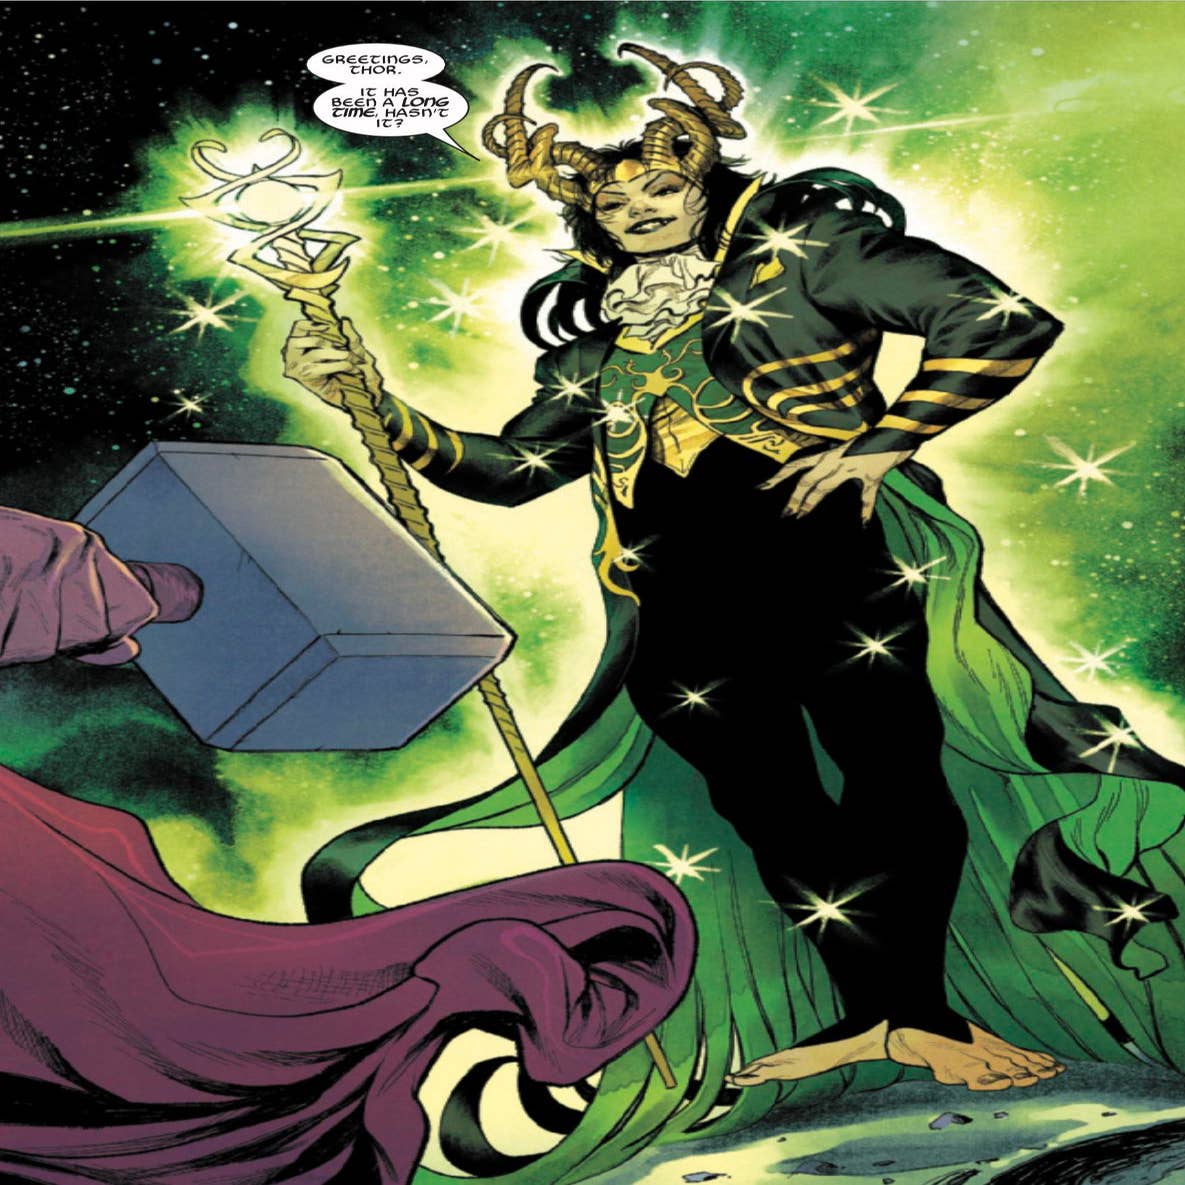 Loki: Season One Novel (Marvel) (Marvel)